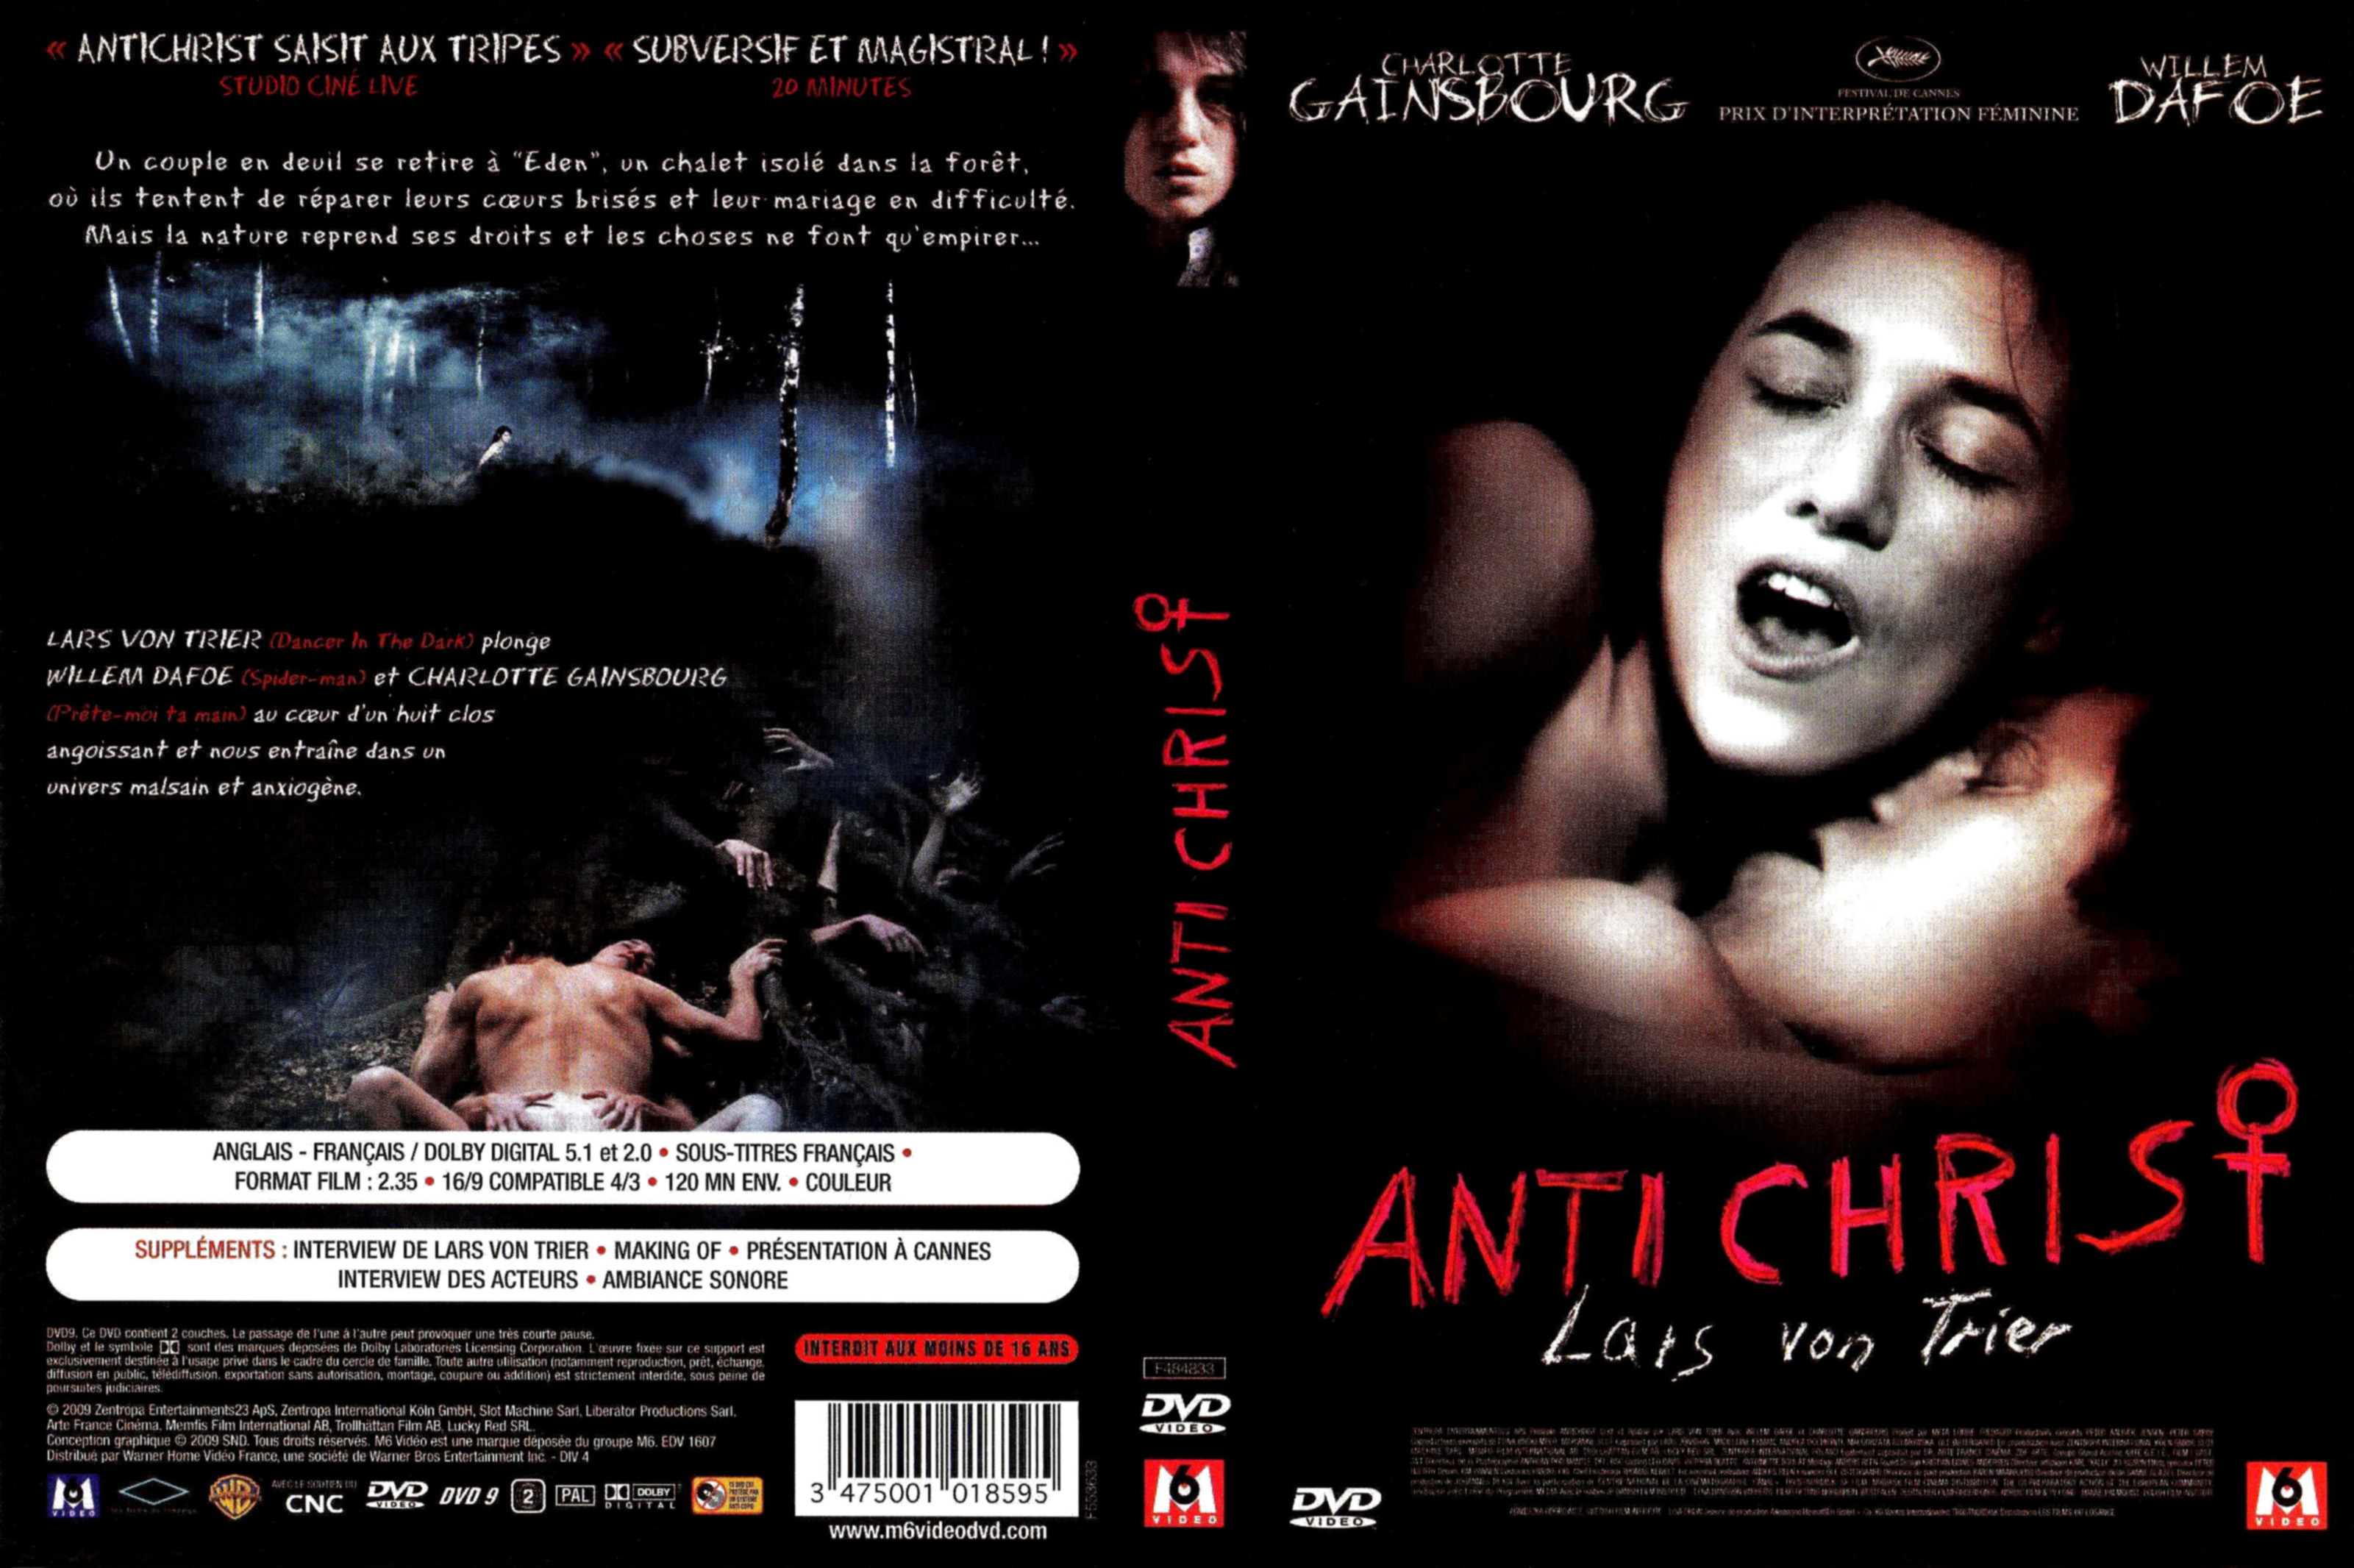 Jaquette DVD Antichrist